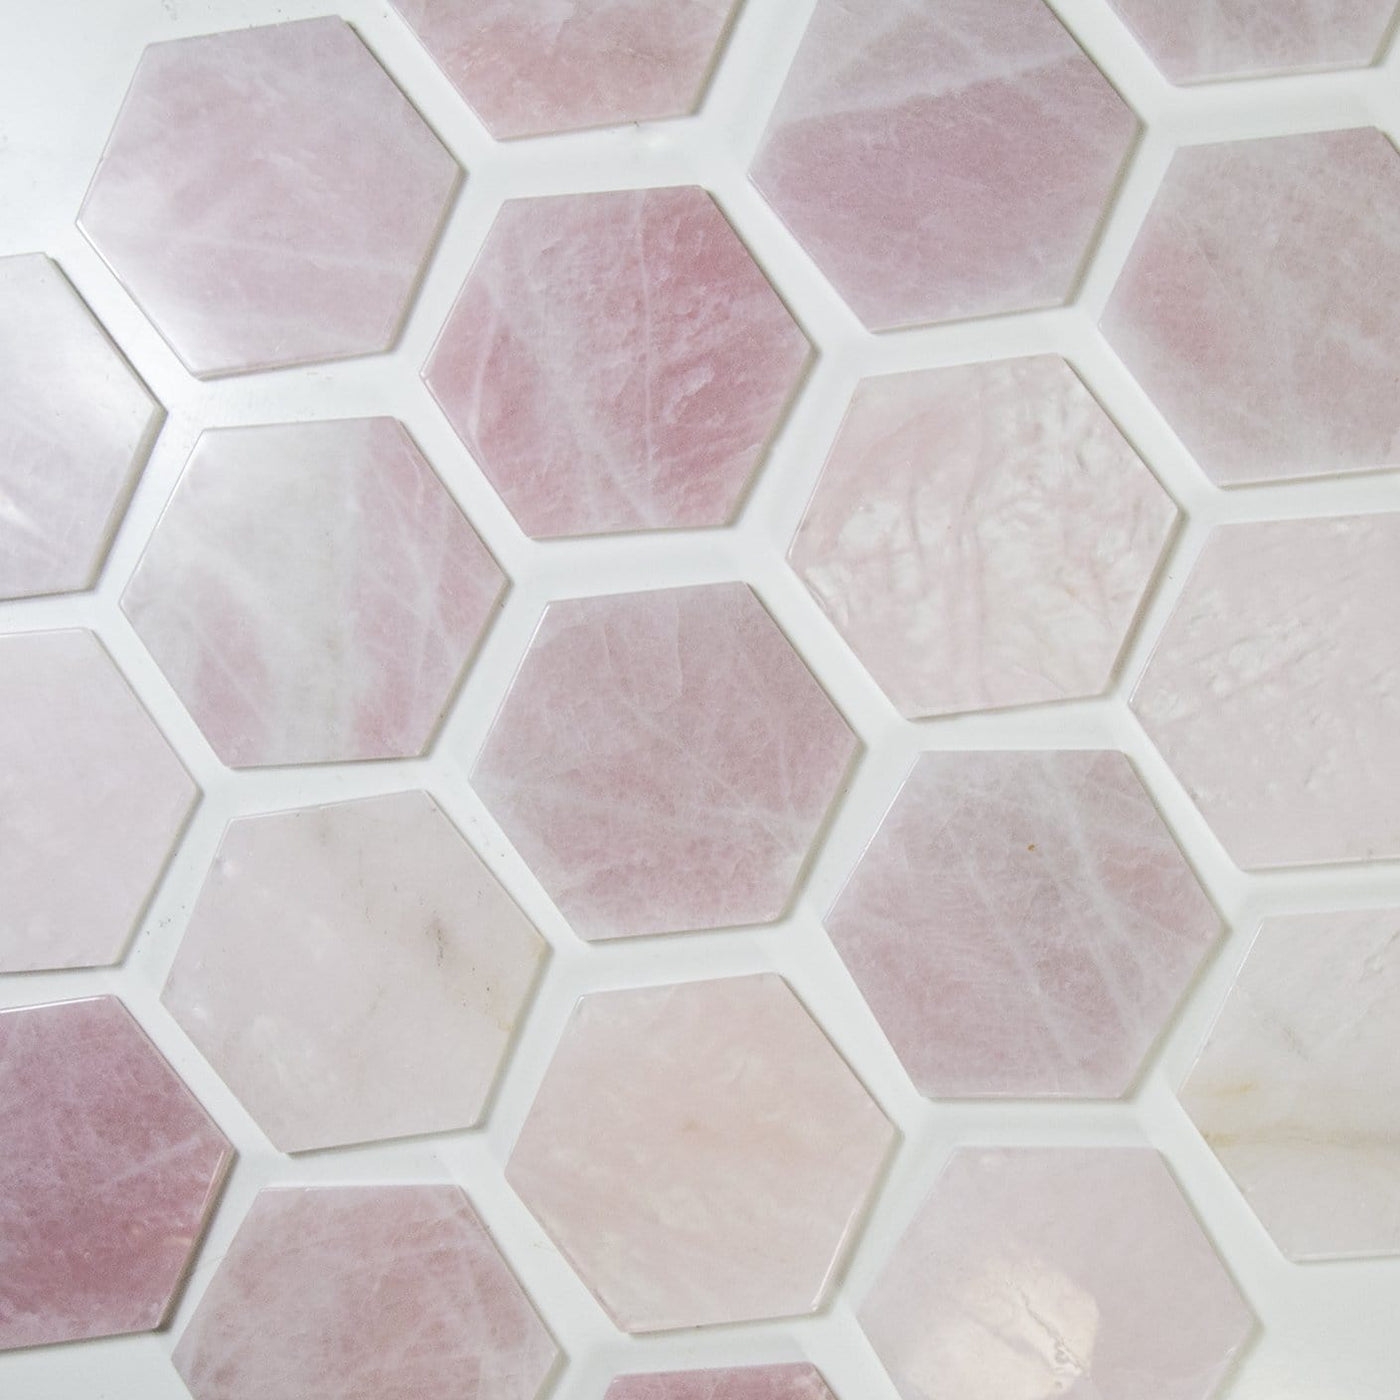 rose quartz hexagons on a table